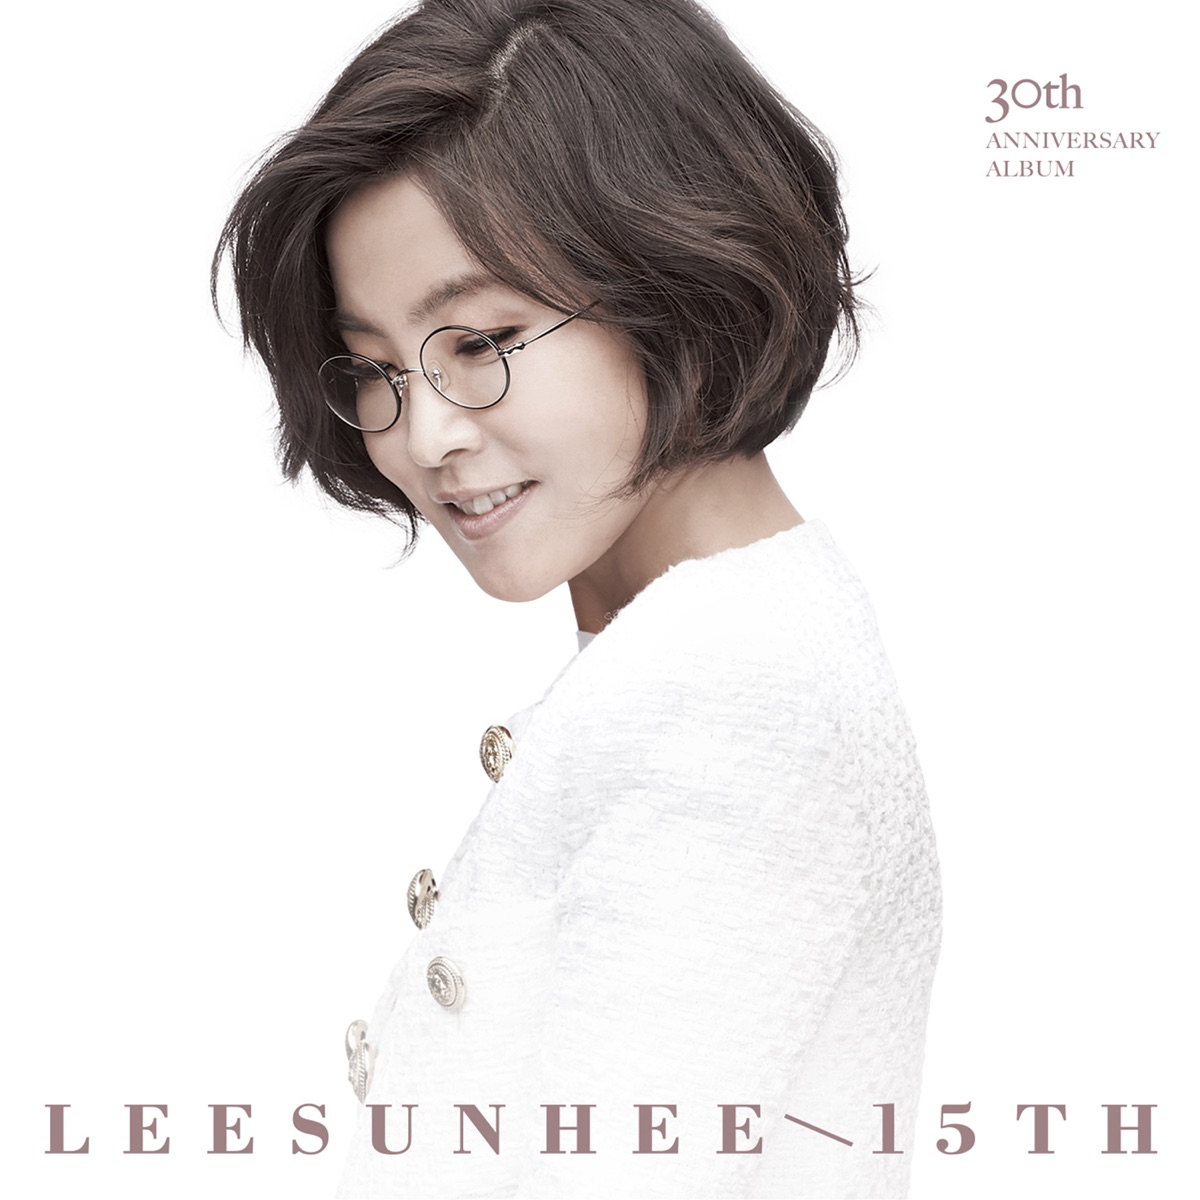 Lee Sun Hee  – Vol. 15 – Serendipity (30th Anniversary Album)